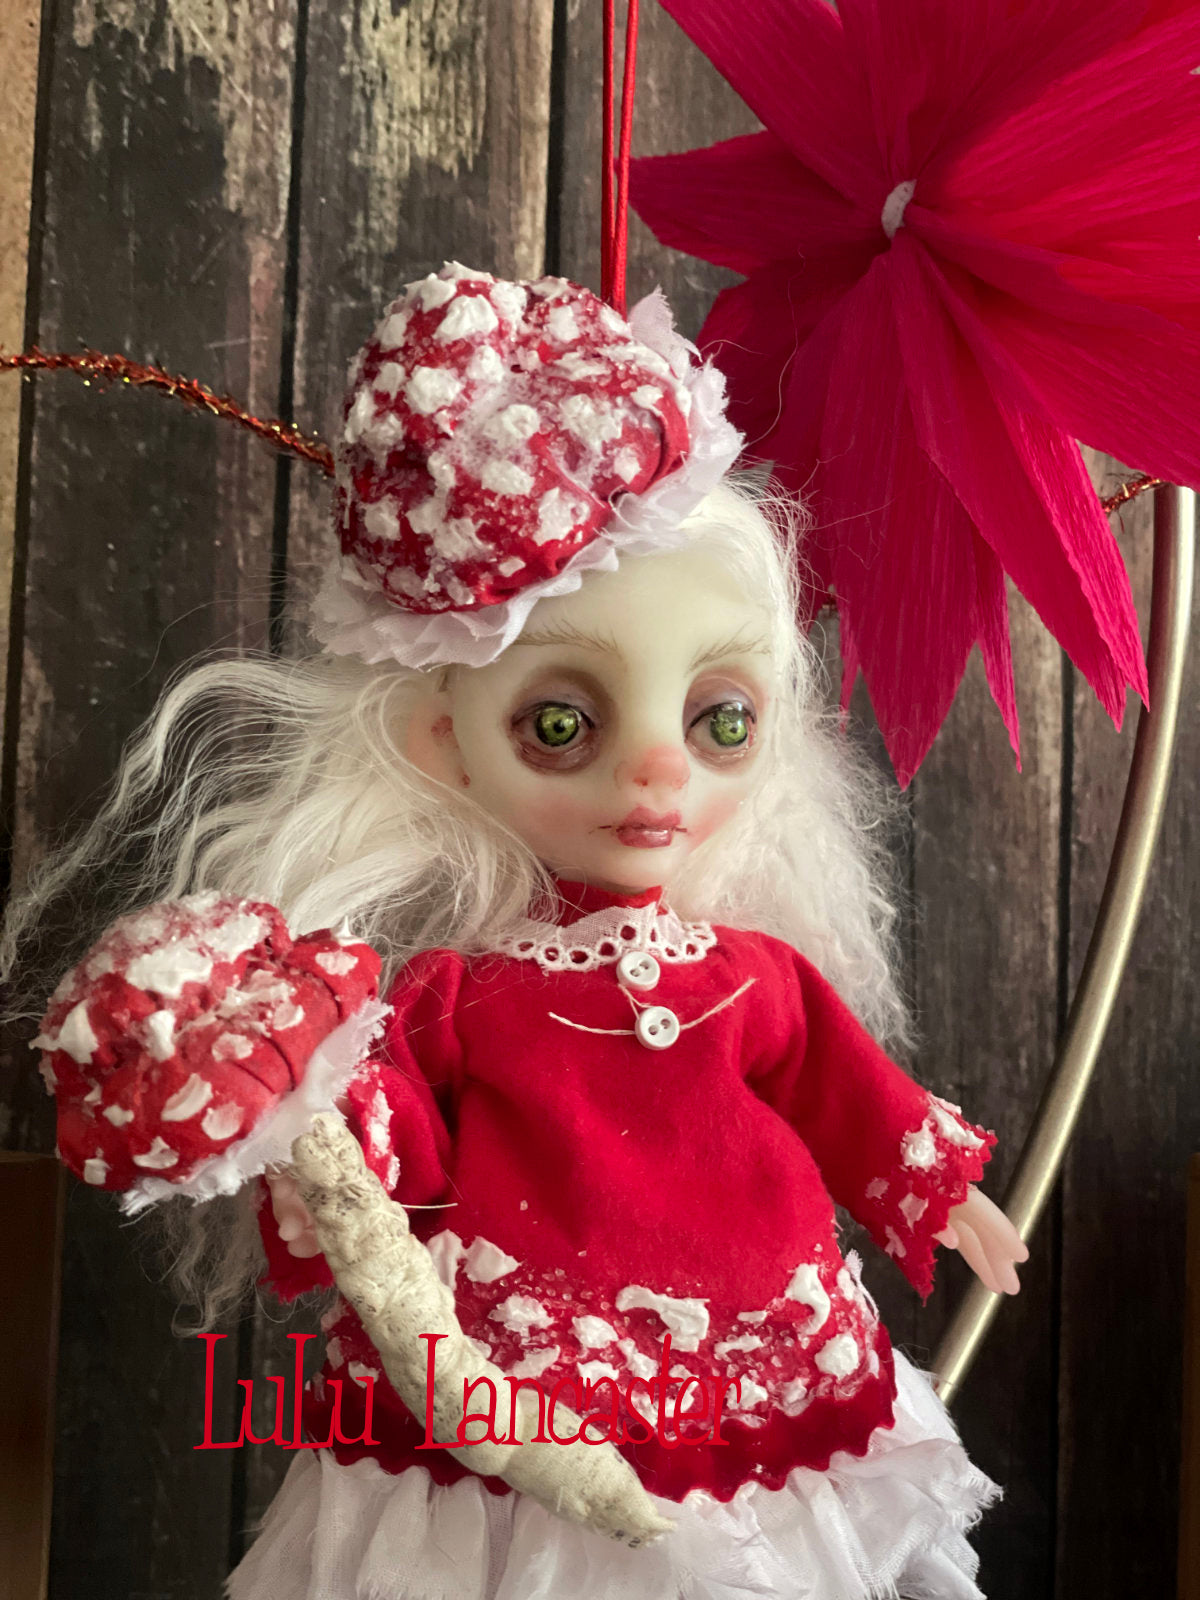 Liesel the amanita sprite Mini hanging Christmas winter Original LuLu Lancaster Art Doll